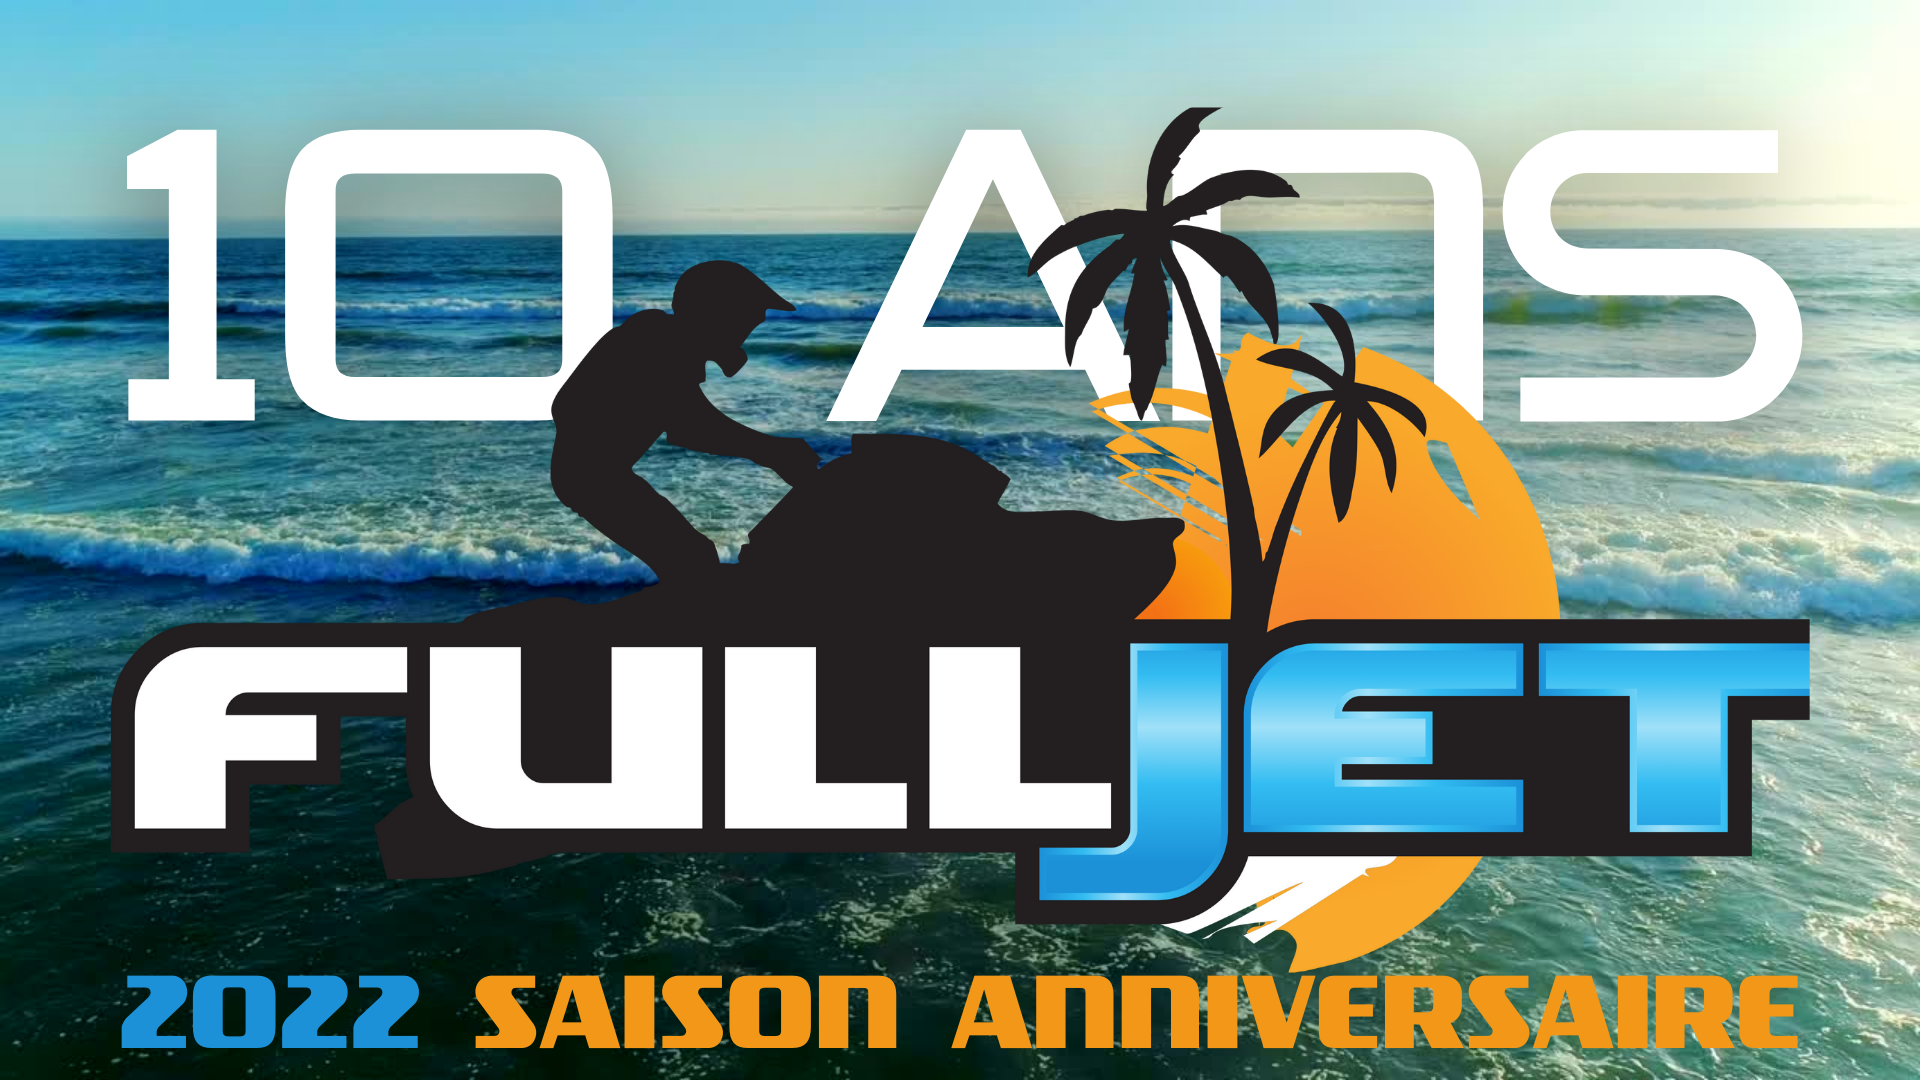 In 2022, FullJet celebrates its 10th anniversary